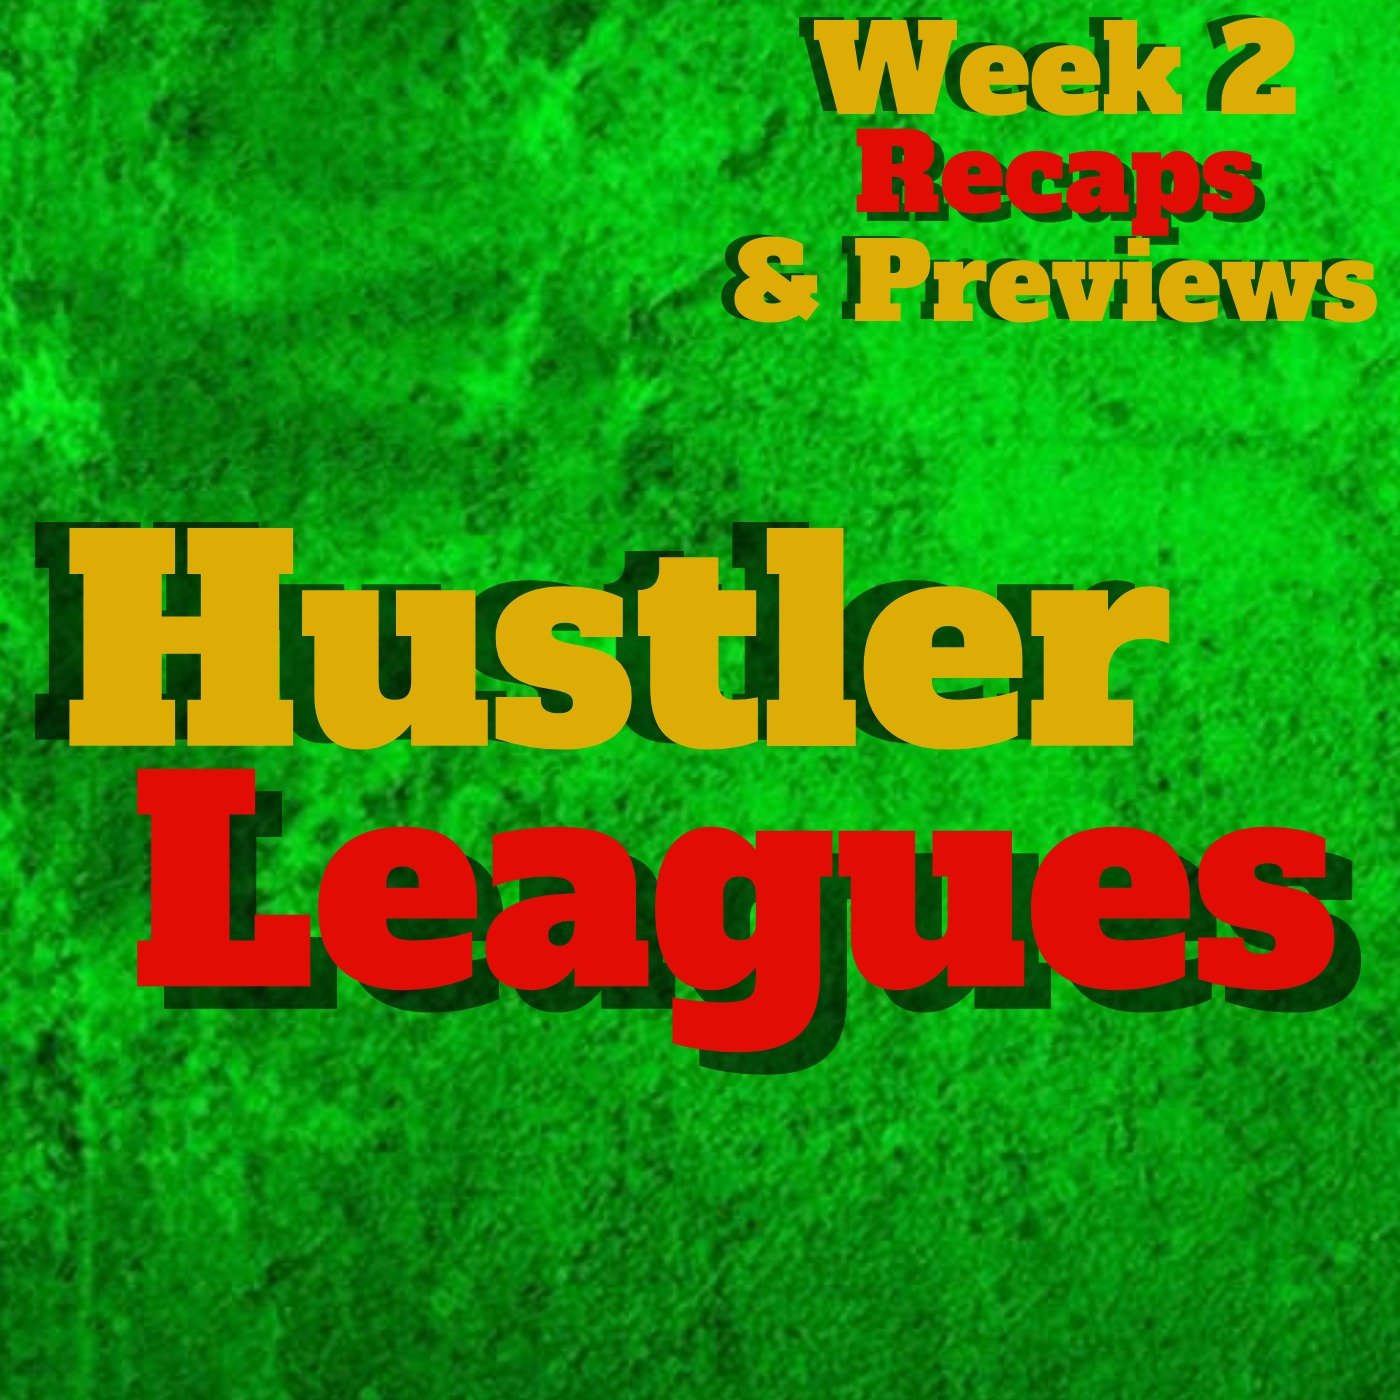 Hustler Fantasy Football Leagues Week 2 Recaps & Previews Image